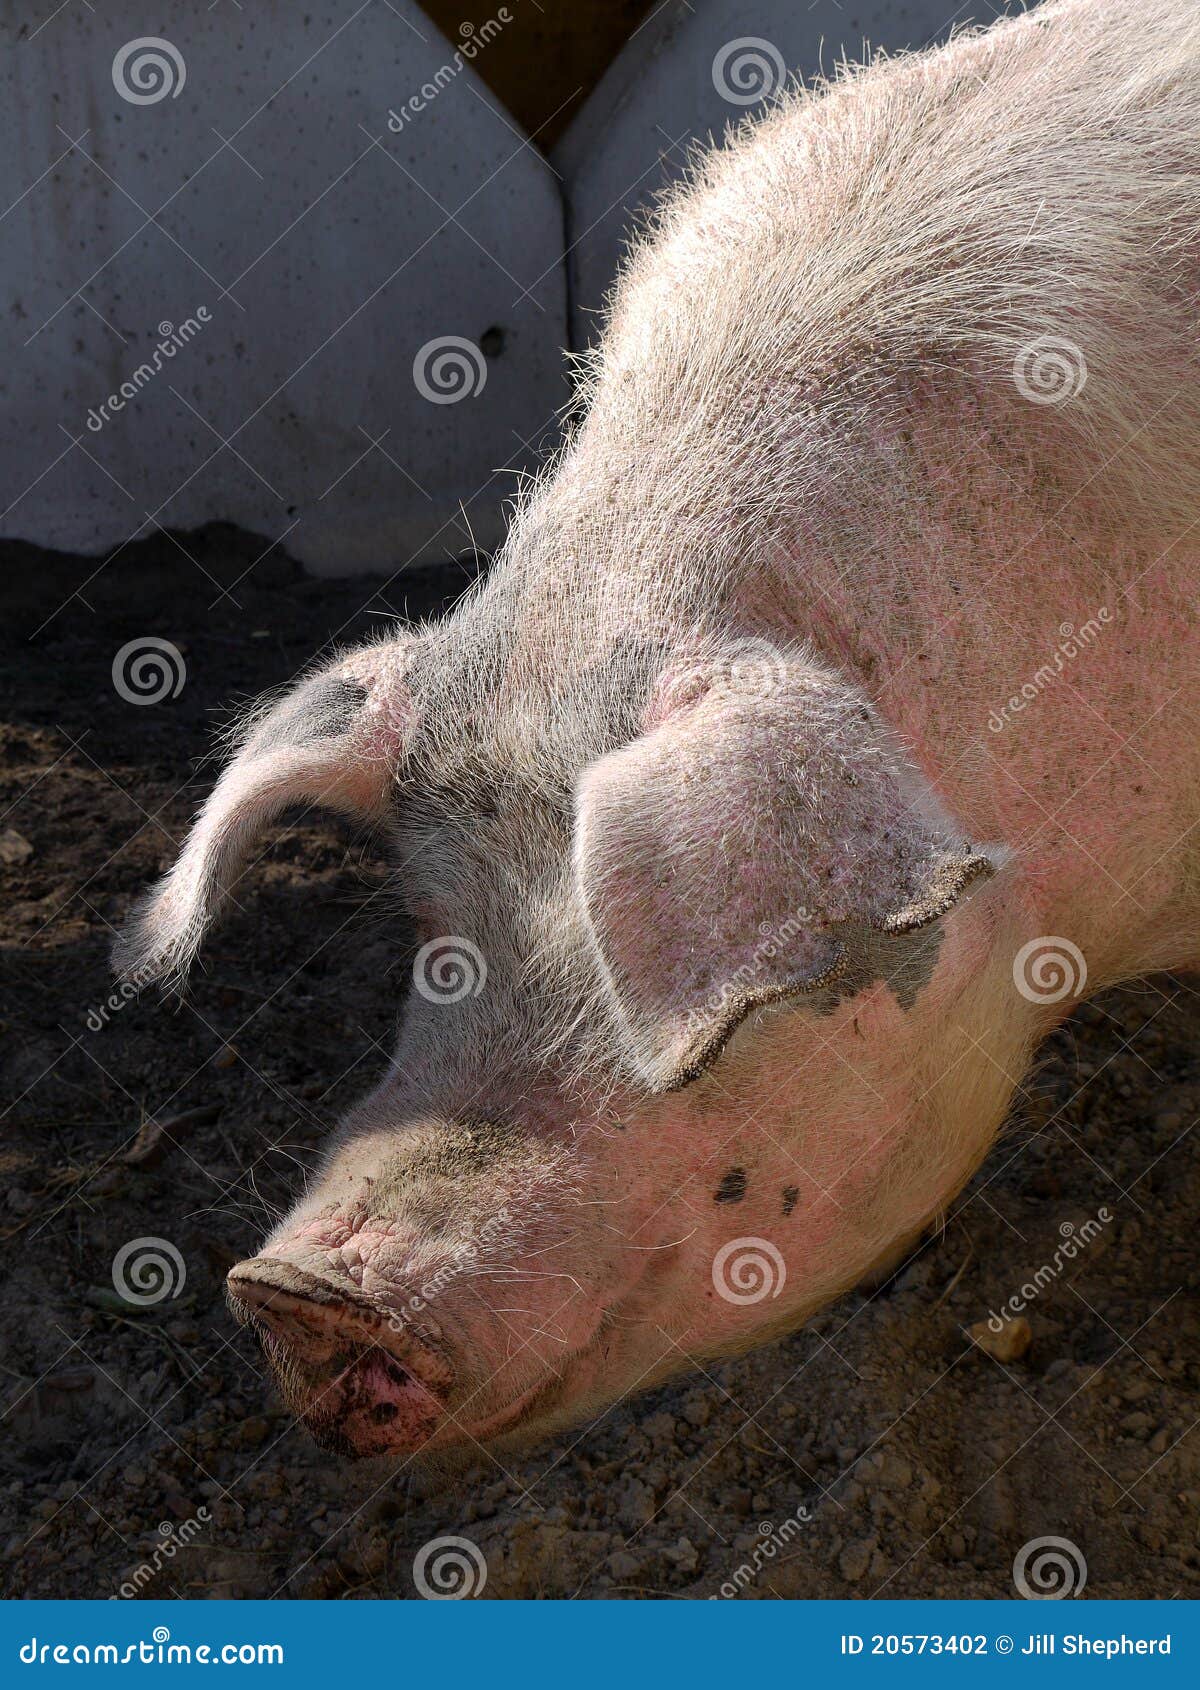 farm: sunlit pig